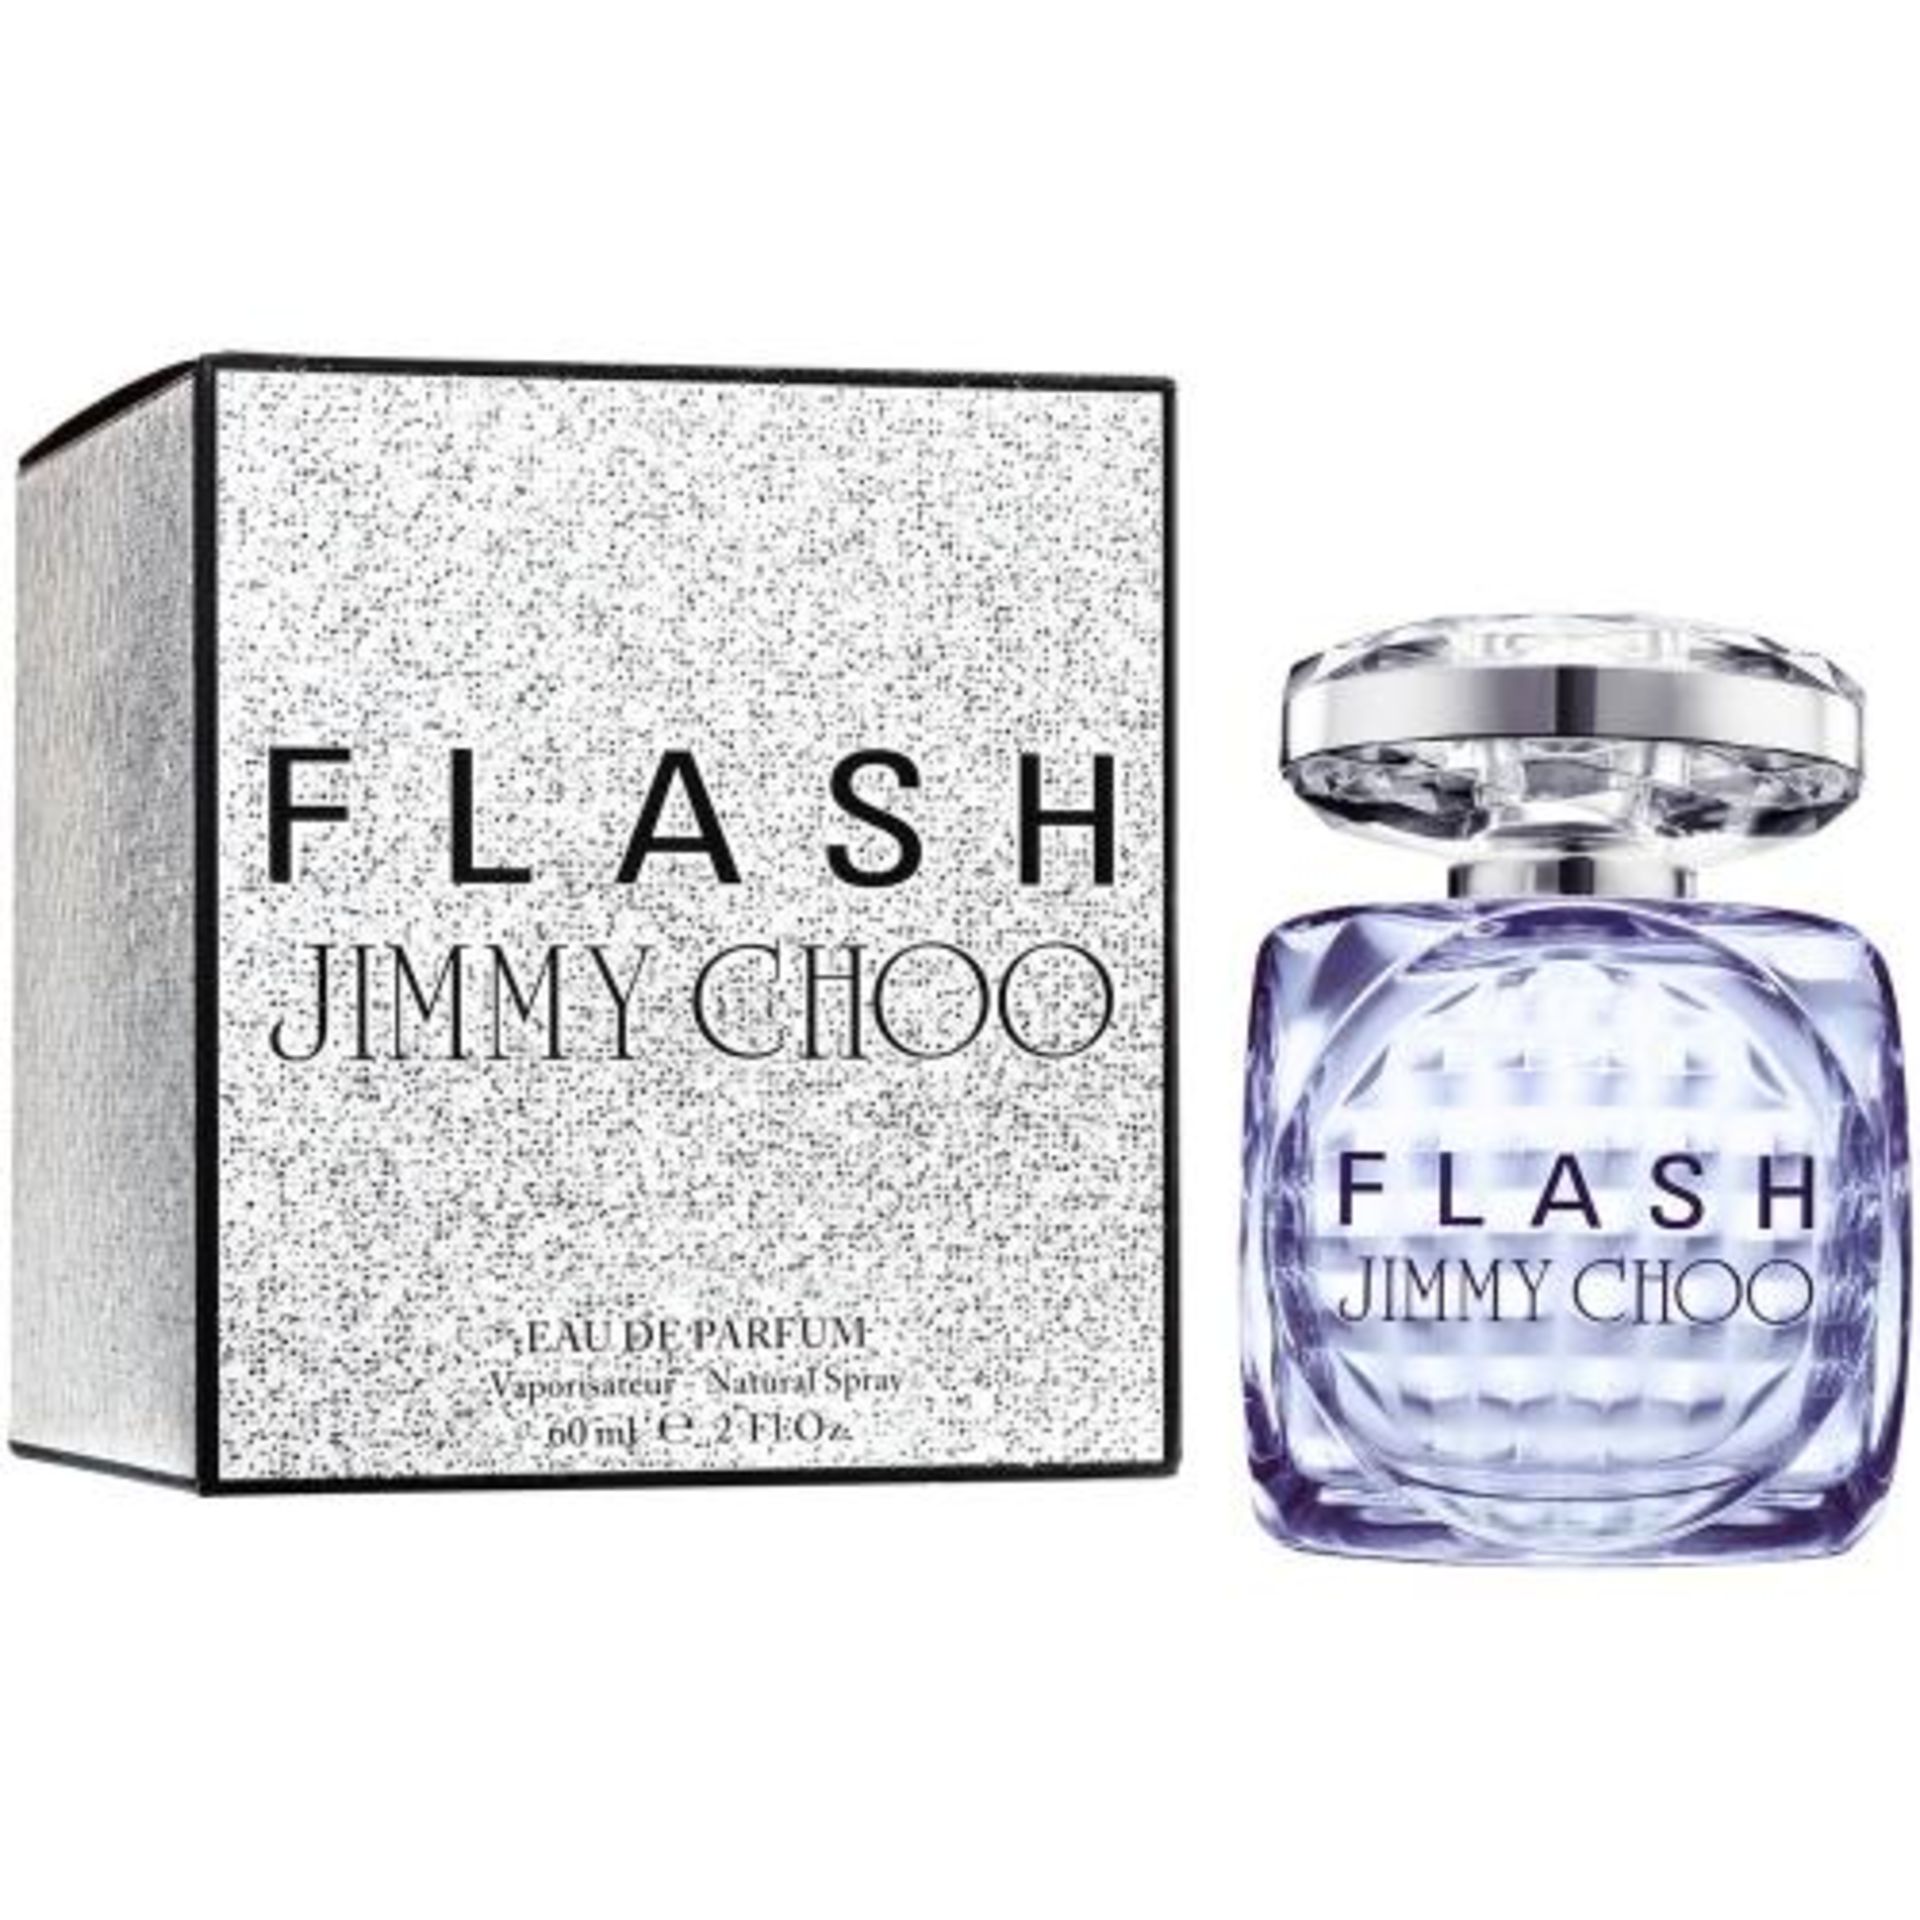 + VAT Brand New Jimmy Choo Flash 60ml EDP Spray